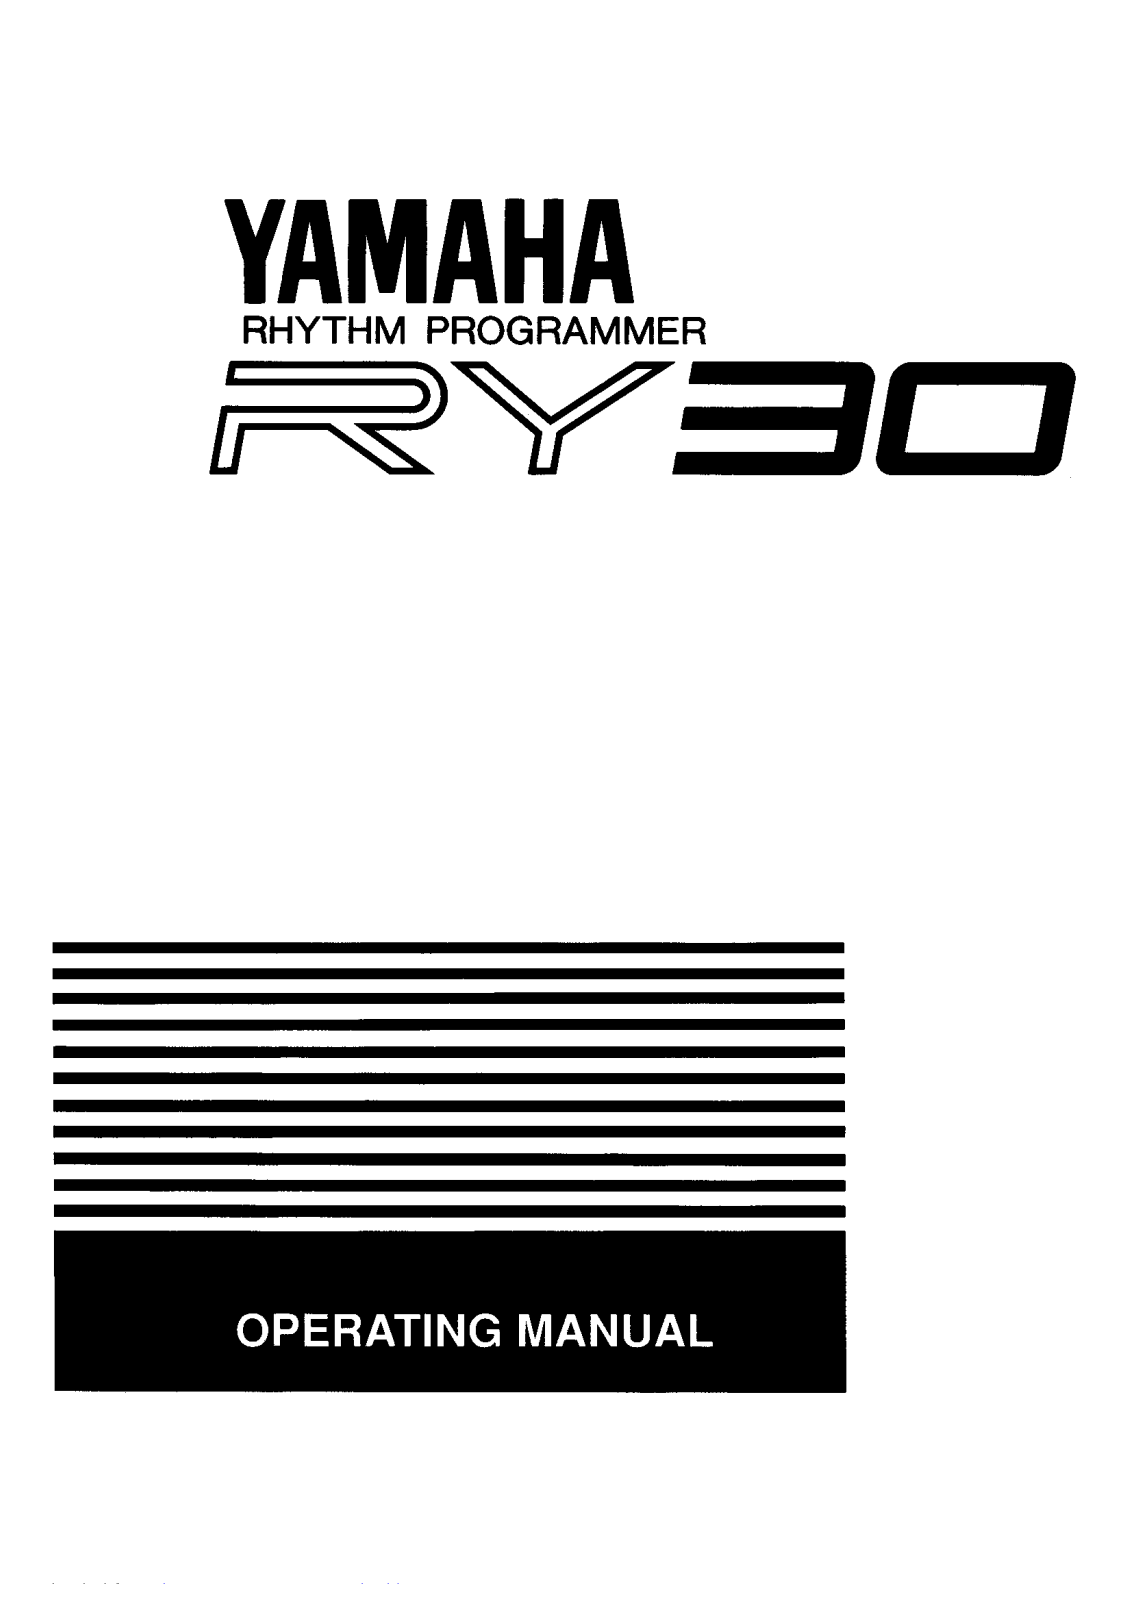 Yamaha Audio RY30 User Manual